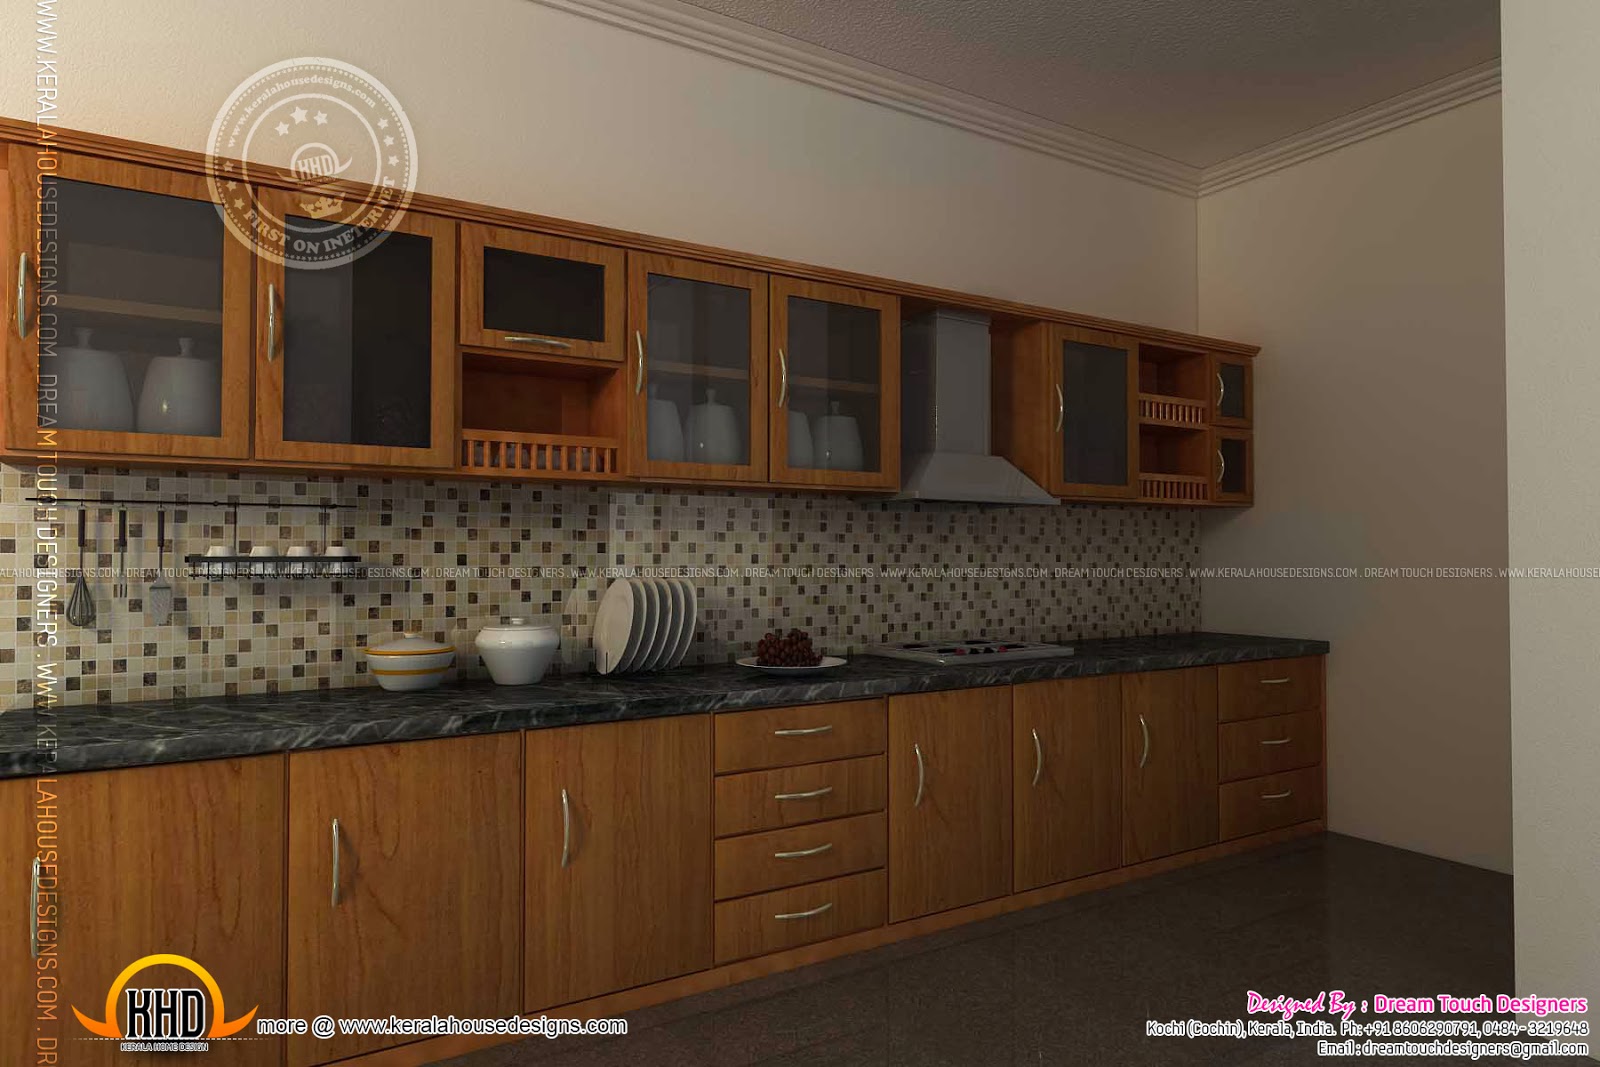  Kitchen  design in Kerala  Home Kerala  Plans